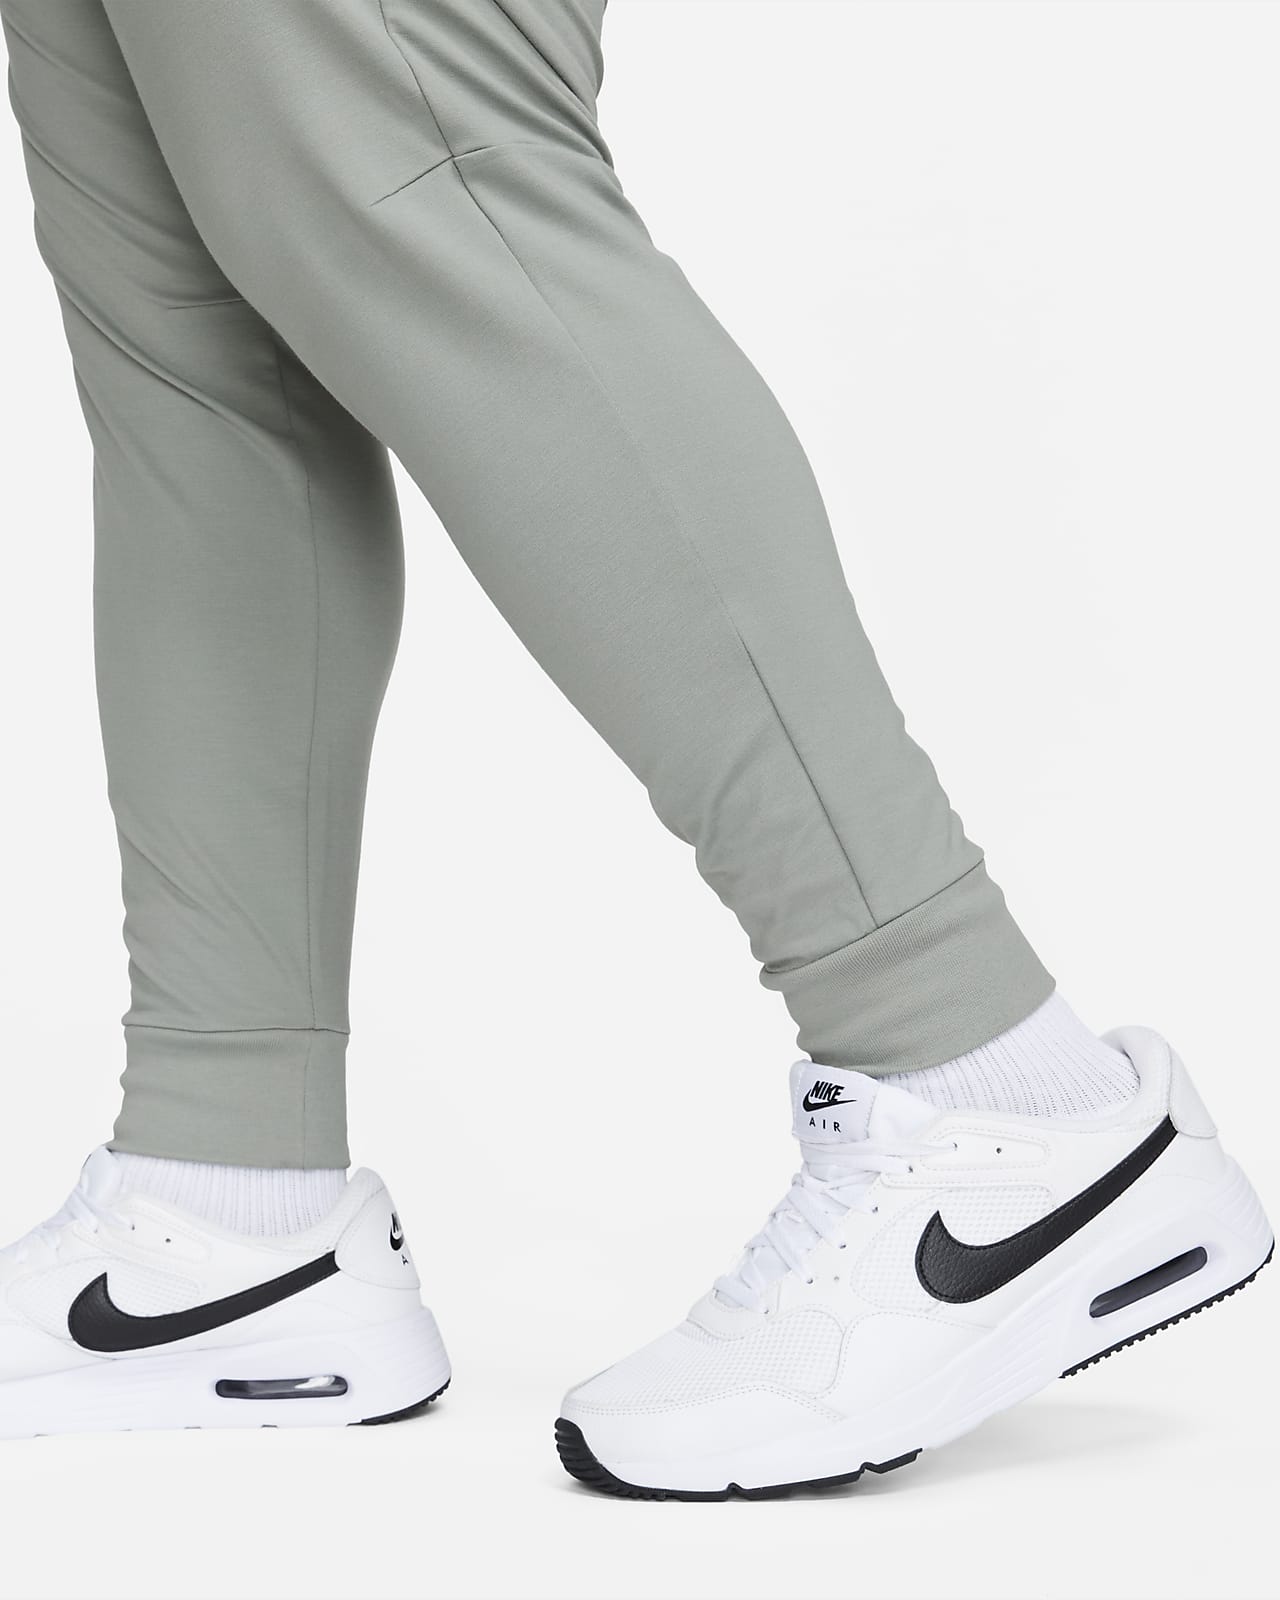 NIKE Men's Joggers Grey Tracksuit Bottoms Sweatpants Sports Gym Pants size  L | eBay